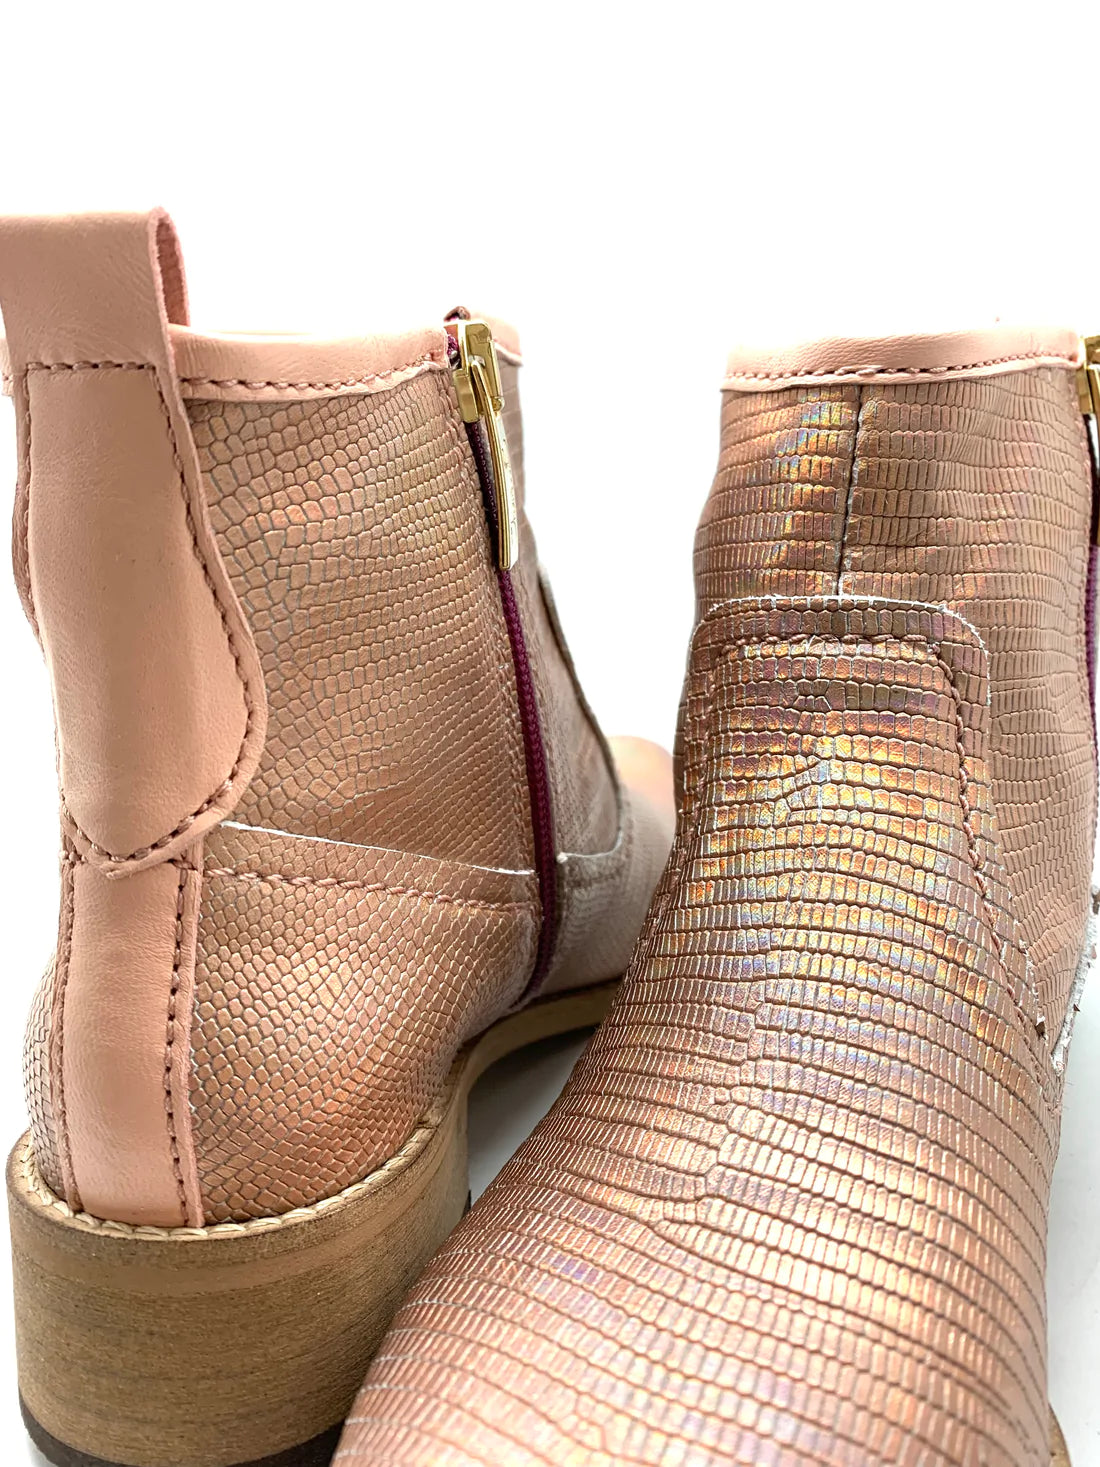 Chanii B "Zipp" Gold Iridescent - Ankle Boot